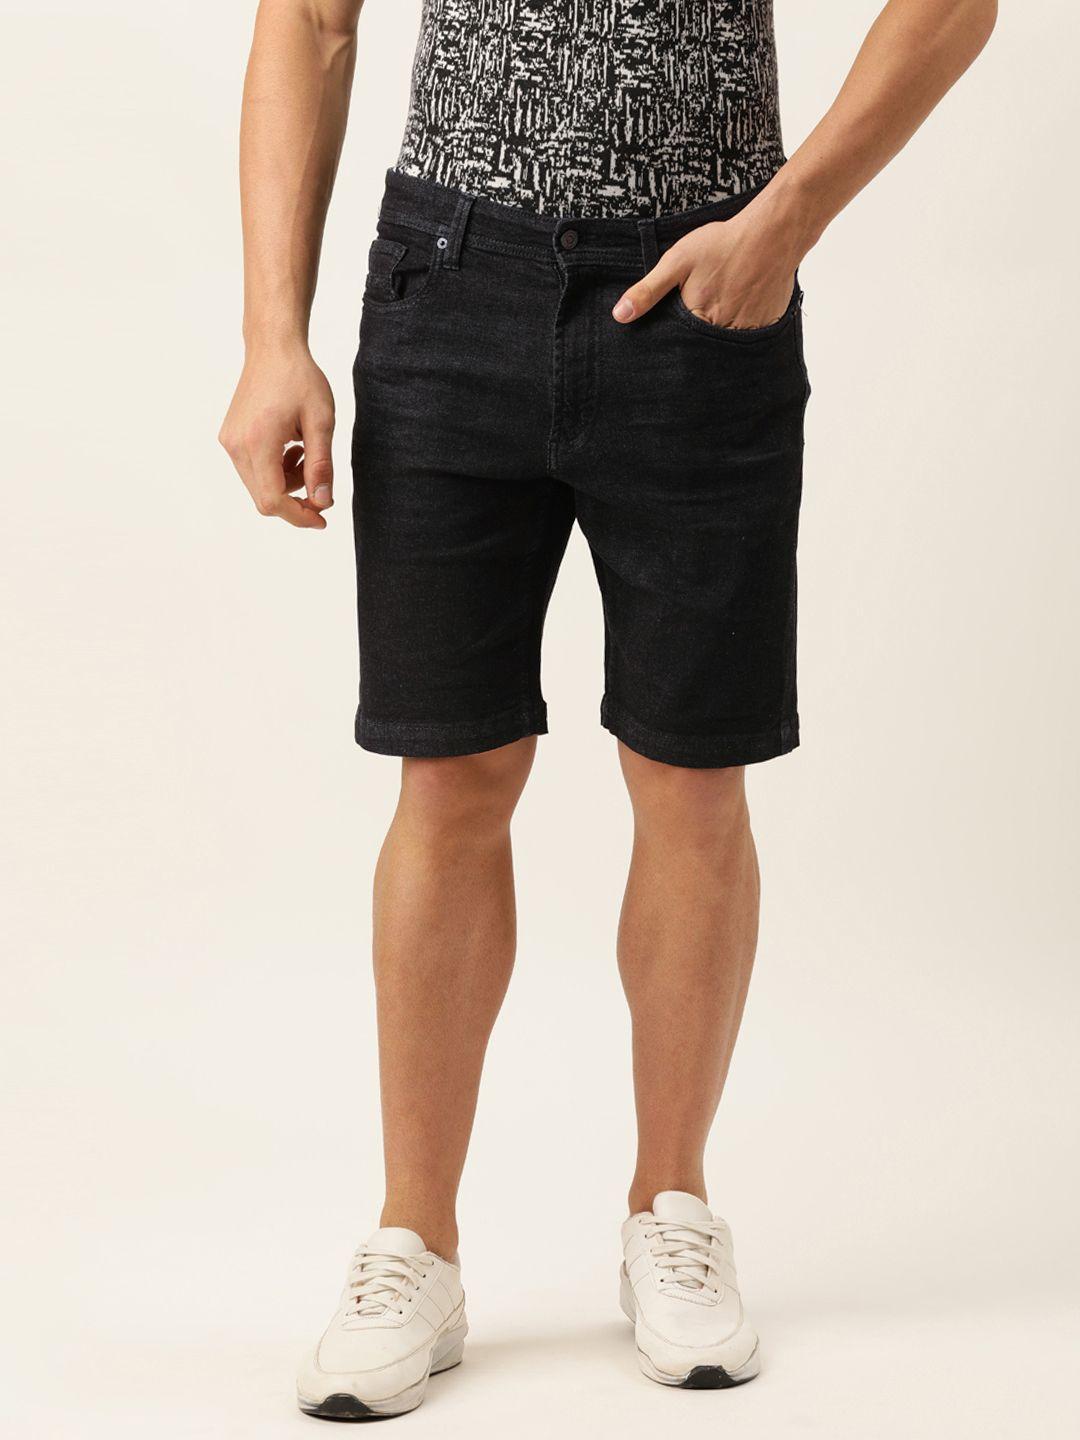 peter england men black solid above knee casual denim shorts